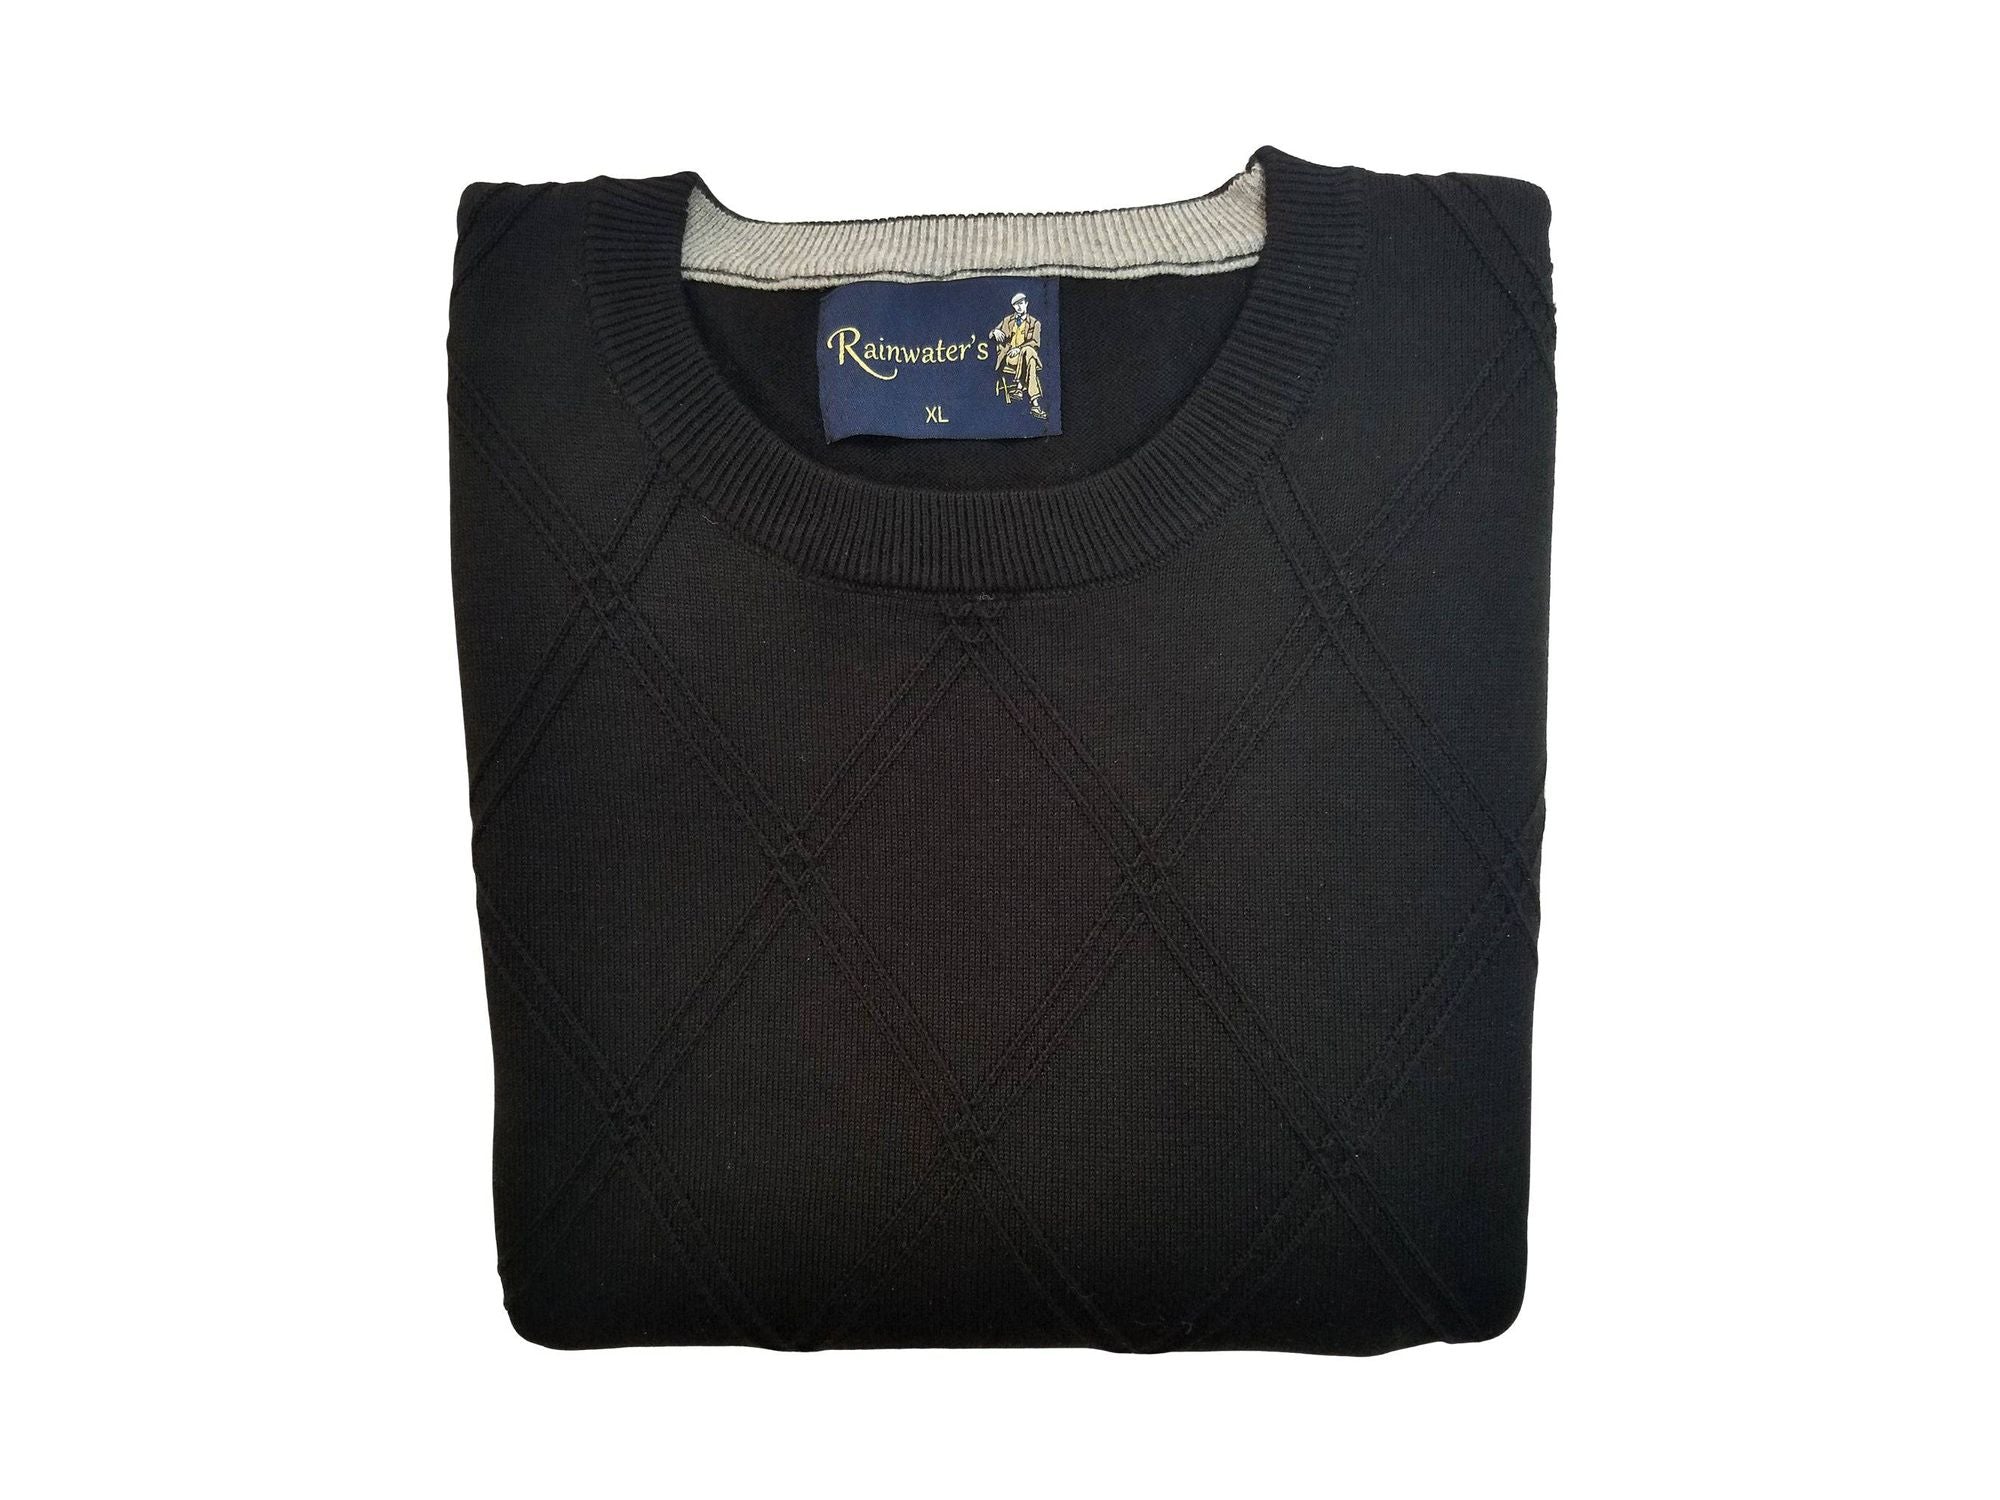 Crew Neck Sweater in Black Diamond Weave Cotton Blend - Rainwater's Men's Clothing and Tuxedo Rental